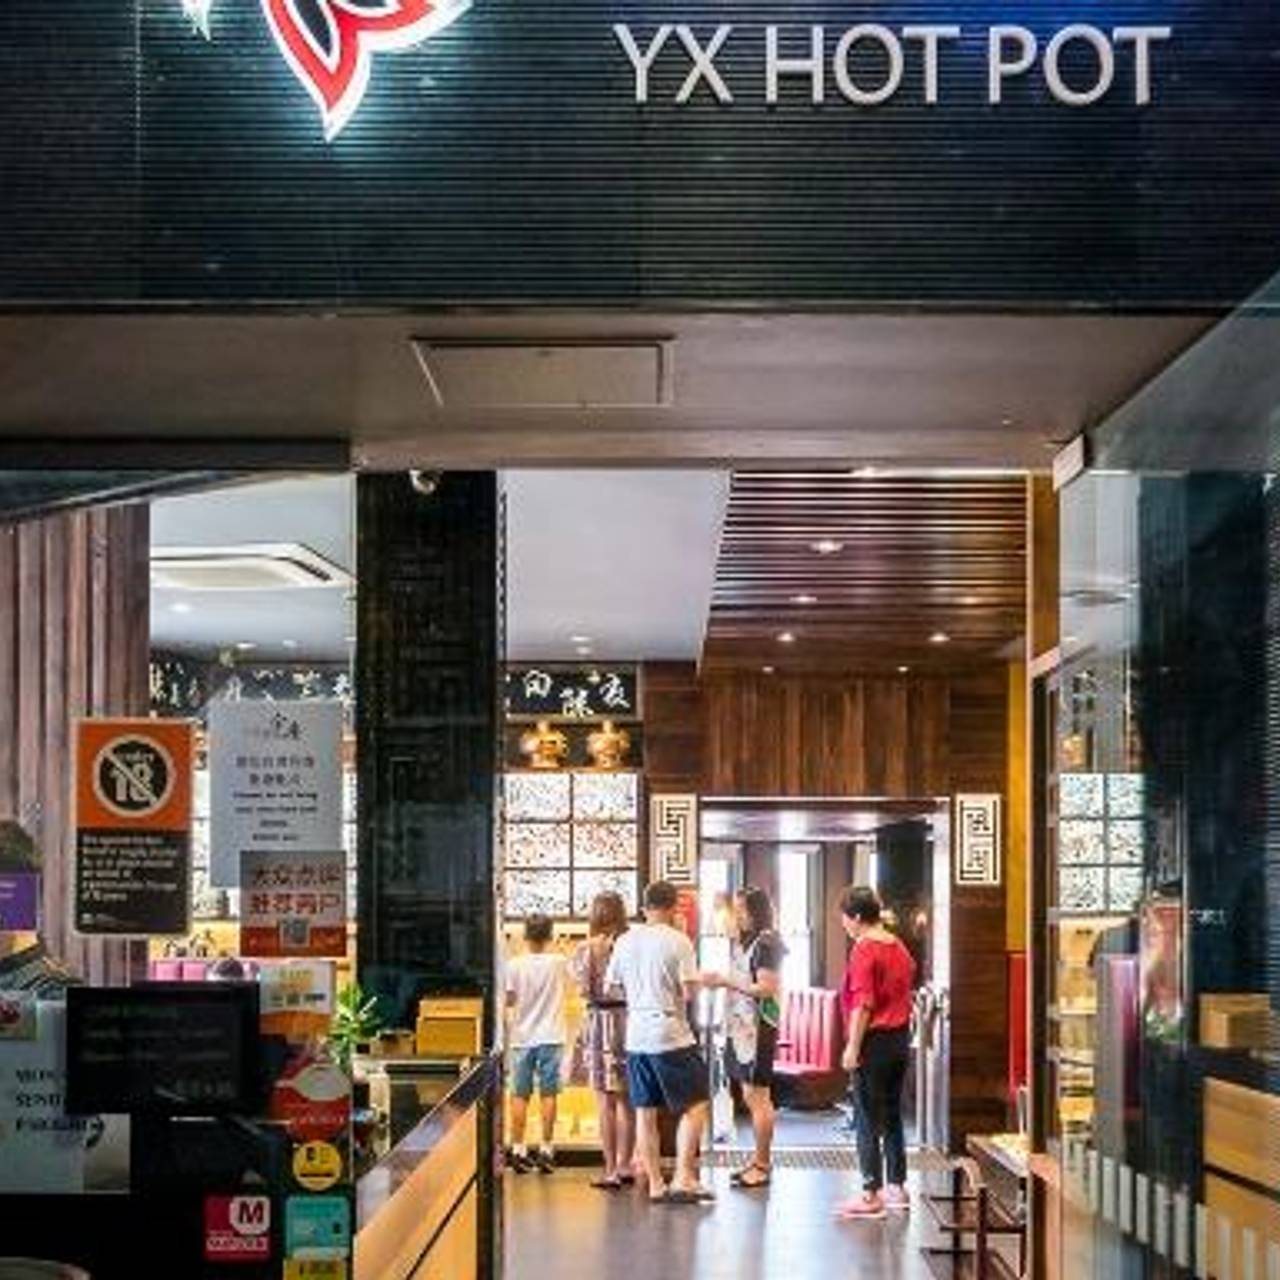 Split hotpot - Picture of Yuxiang Mini Hot Pot, Sydney - Tripadvisor